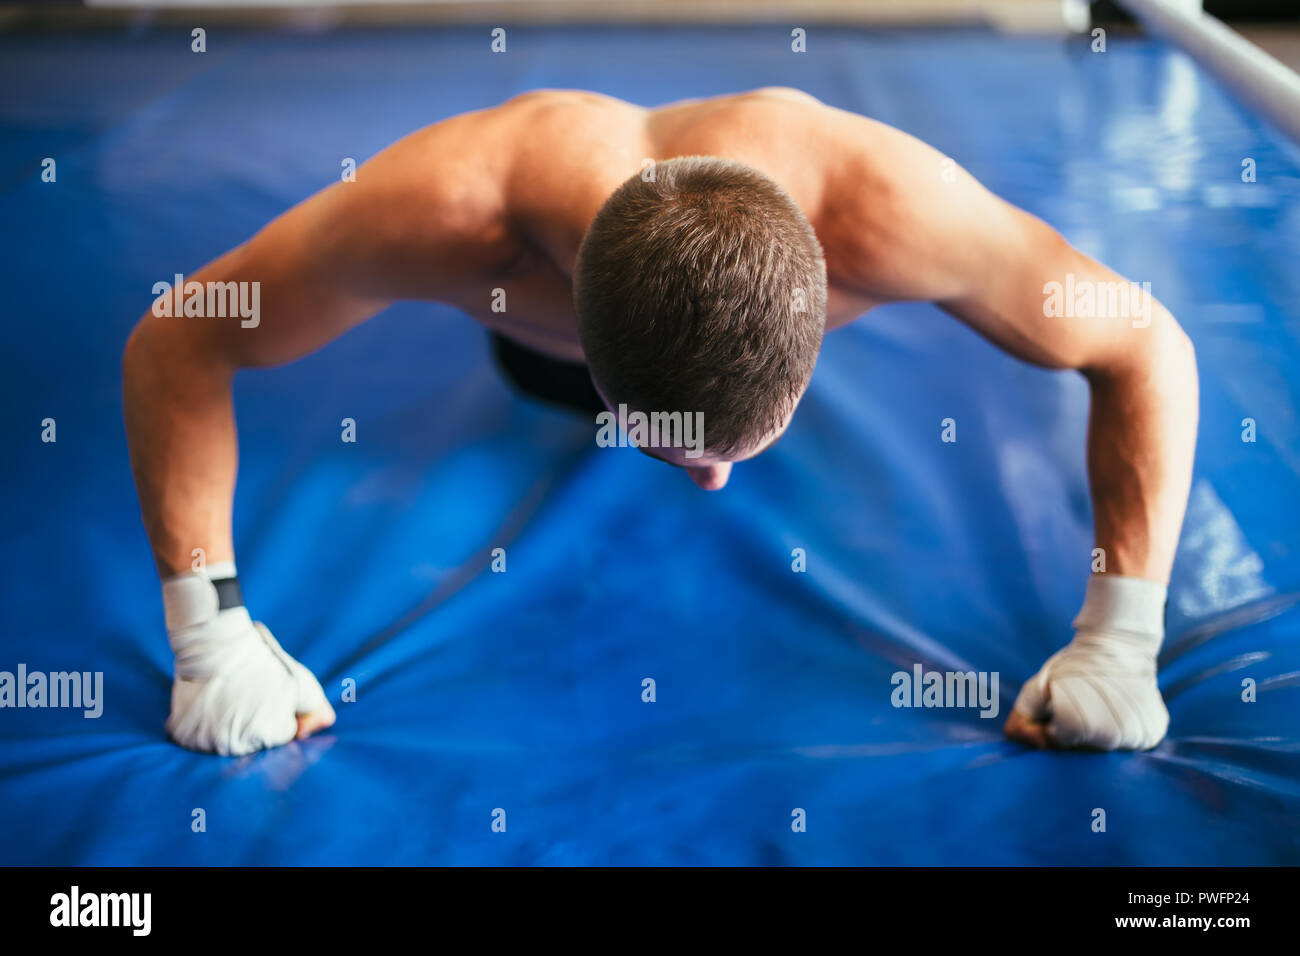 Athlete man doing pushup exercise in gym Stock Photo